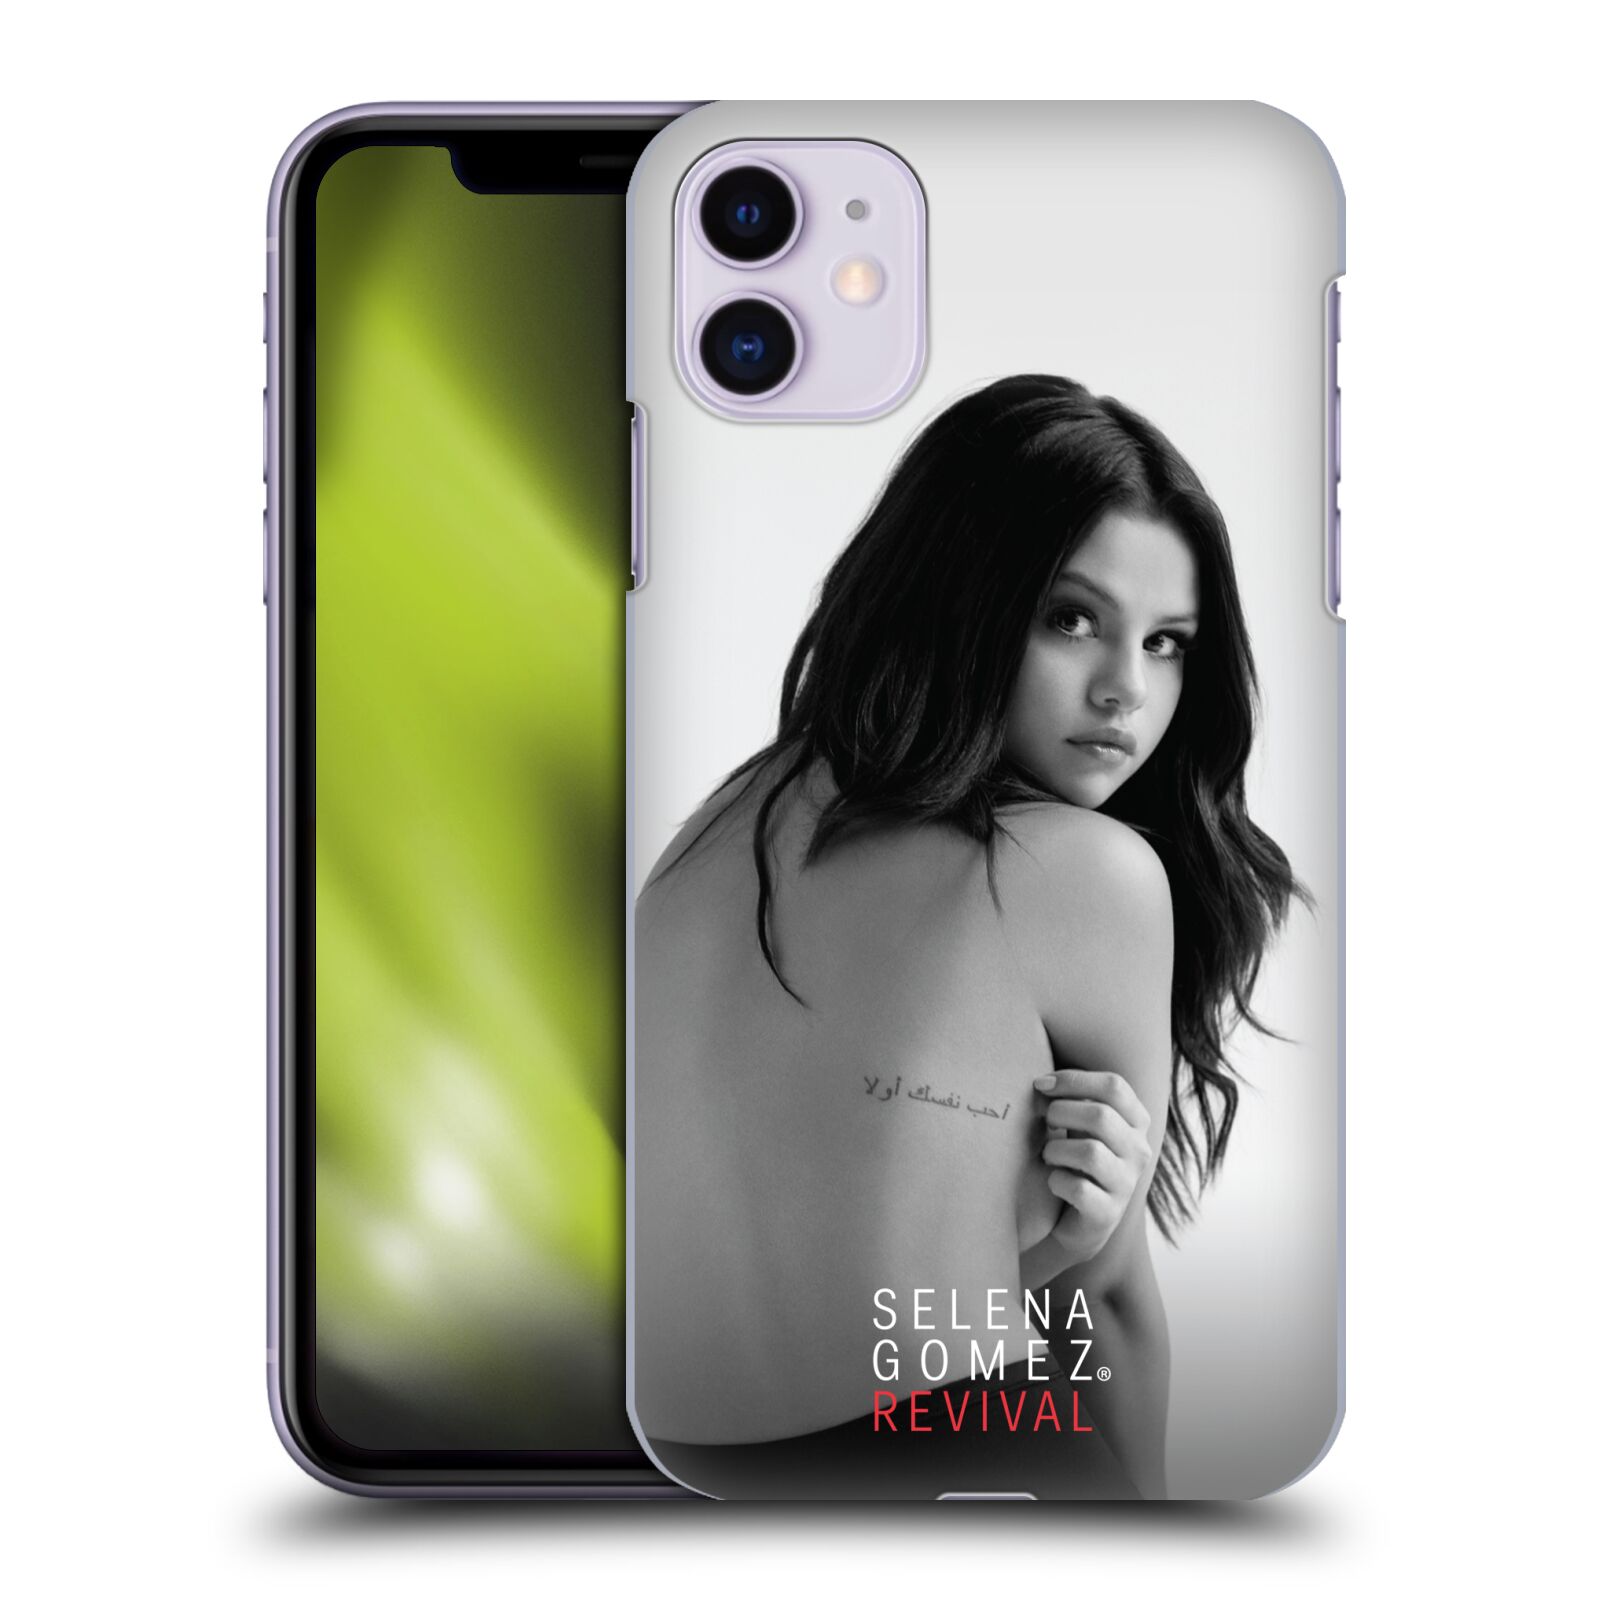 Pouzdro na mobil Apple Iphone 11 - HEAD CASE - Zpěvačka Selena Gomez foto Revival zadní strana